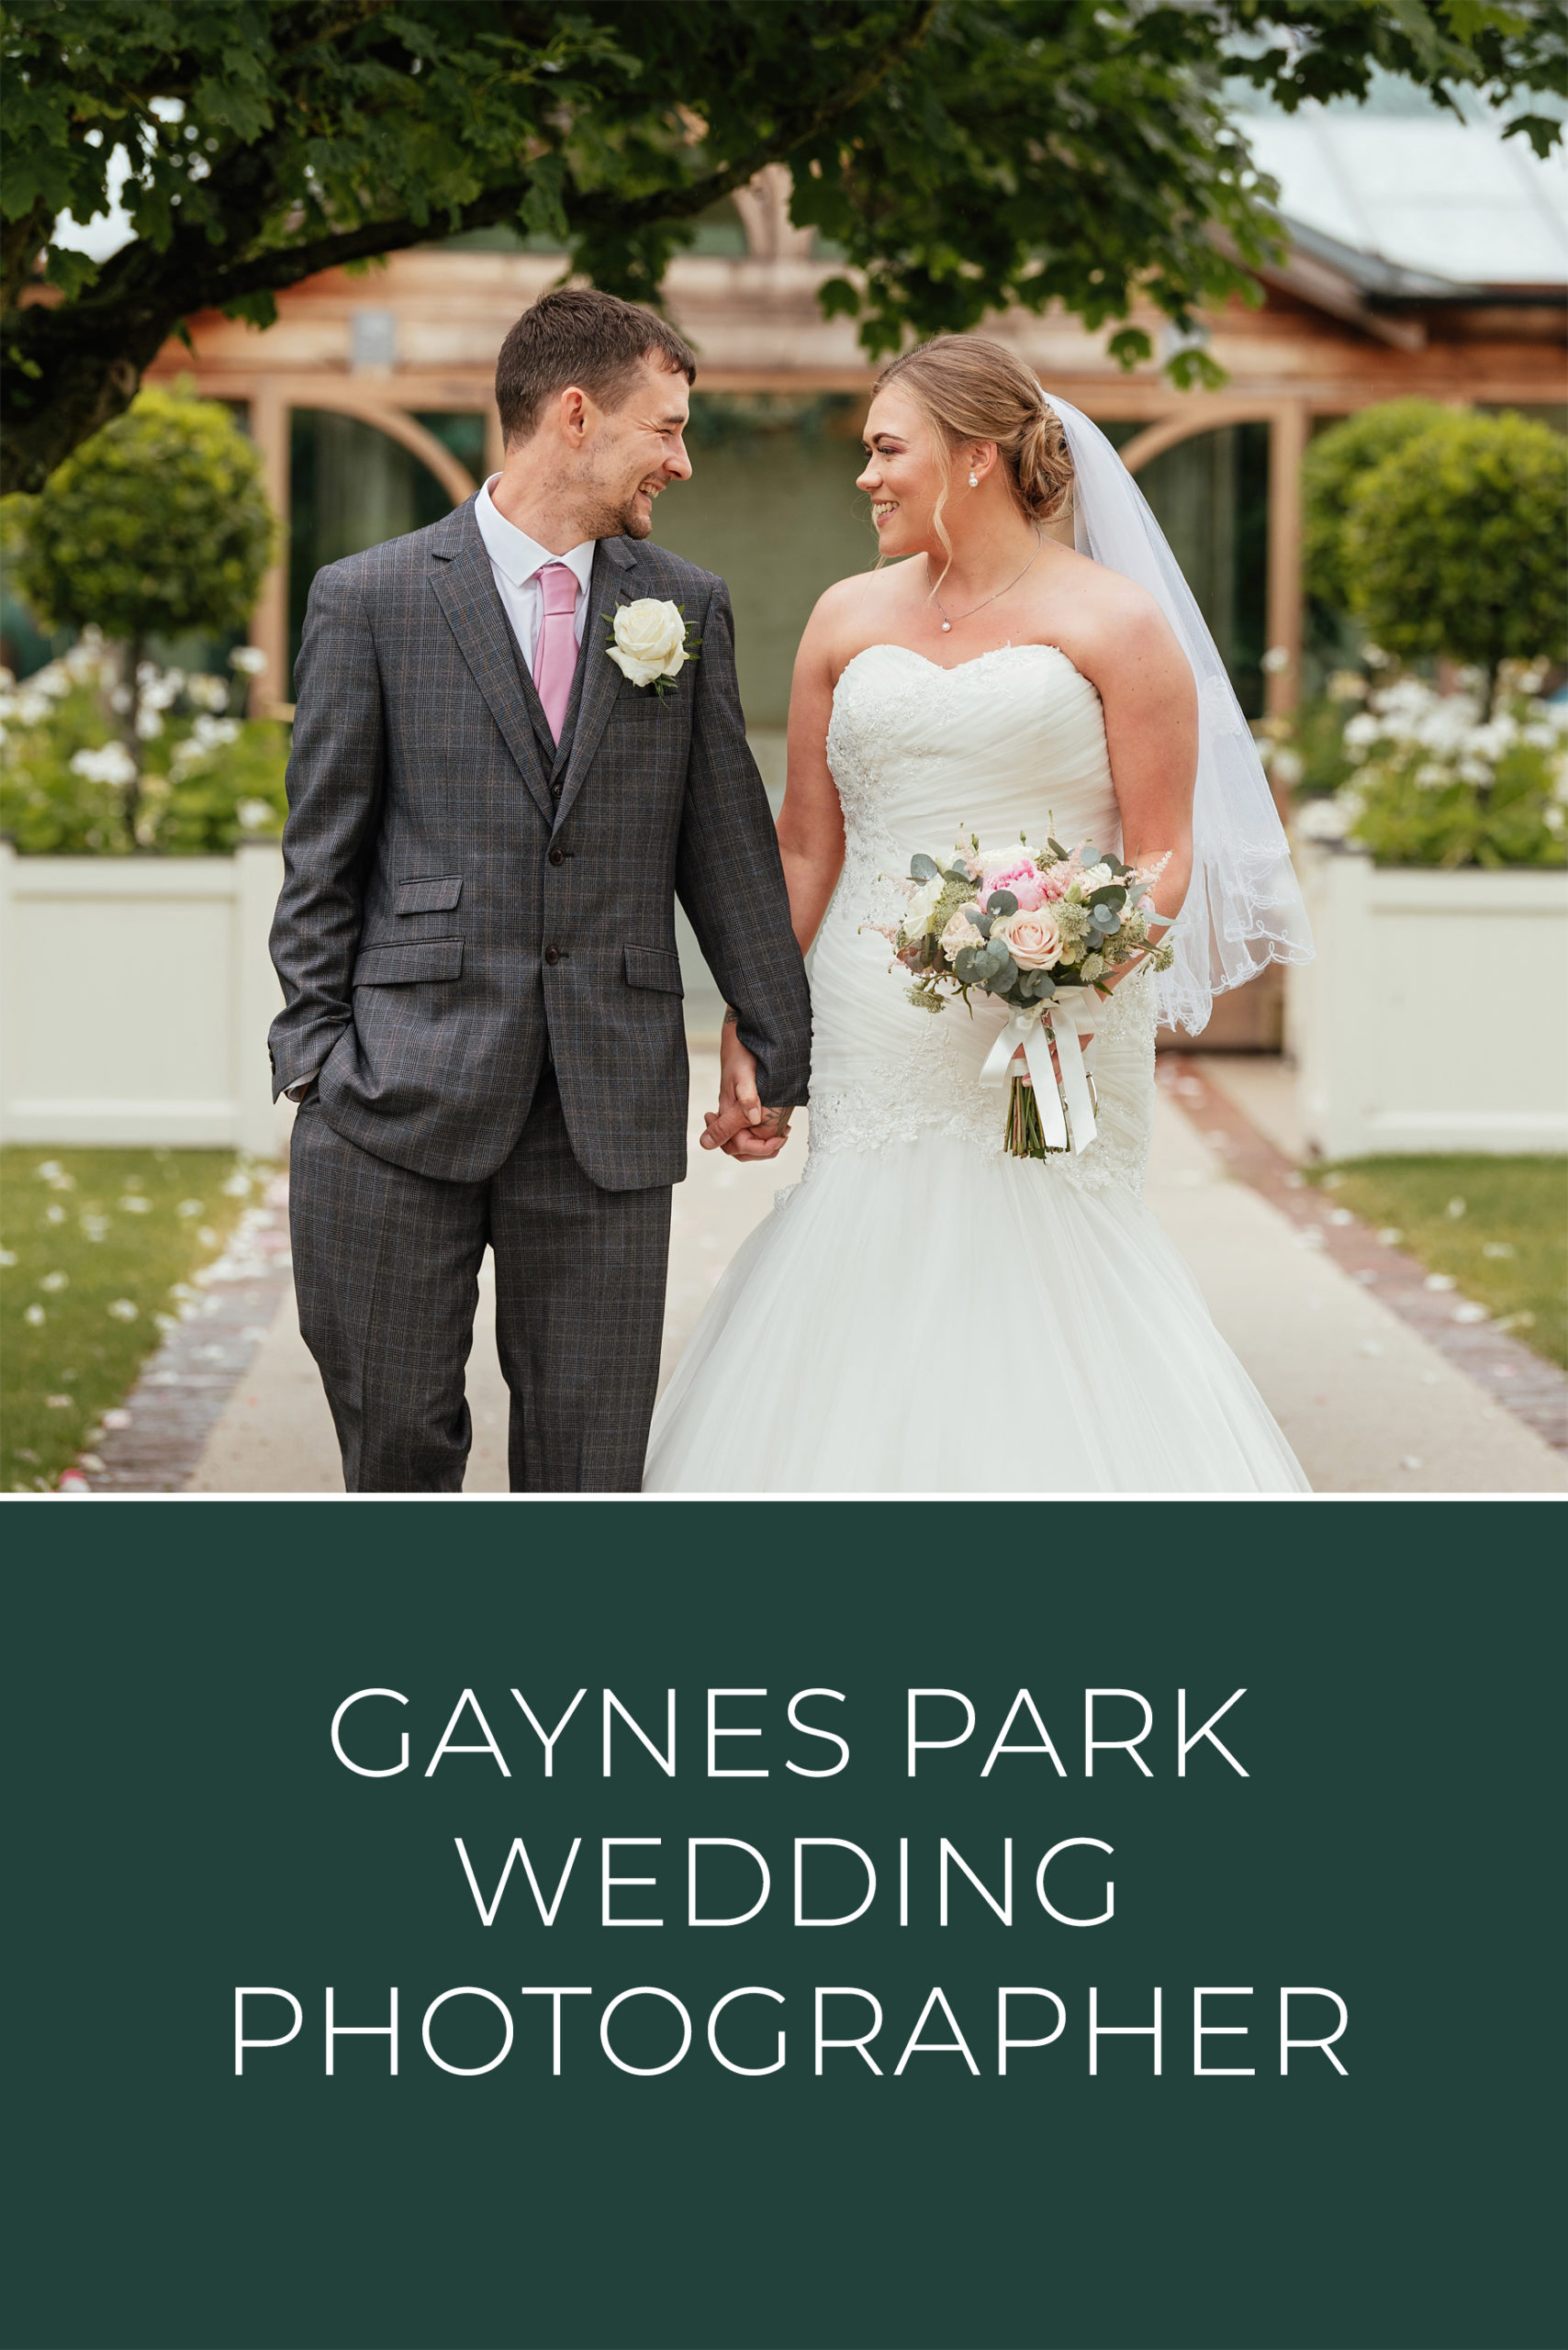 Gaynes Park Wedding Photographer Pinterest Graphic